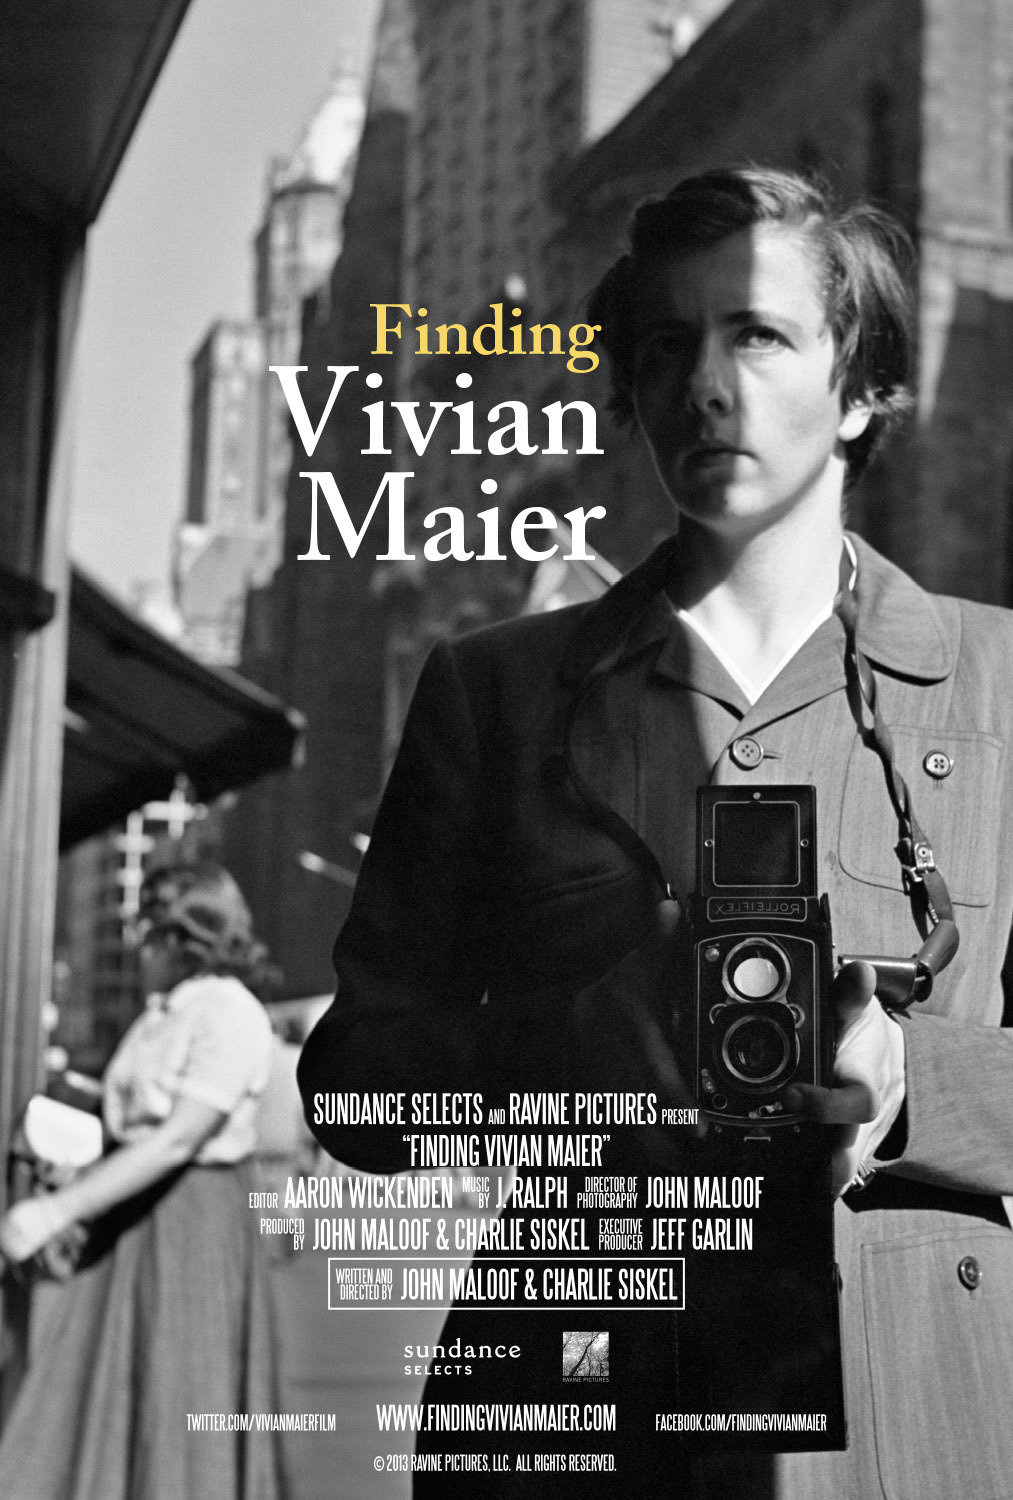 Nonton film Finding Vivian Maier layarkaca21 indoxx1 ganool online streaming terbaru